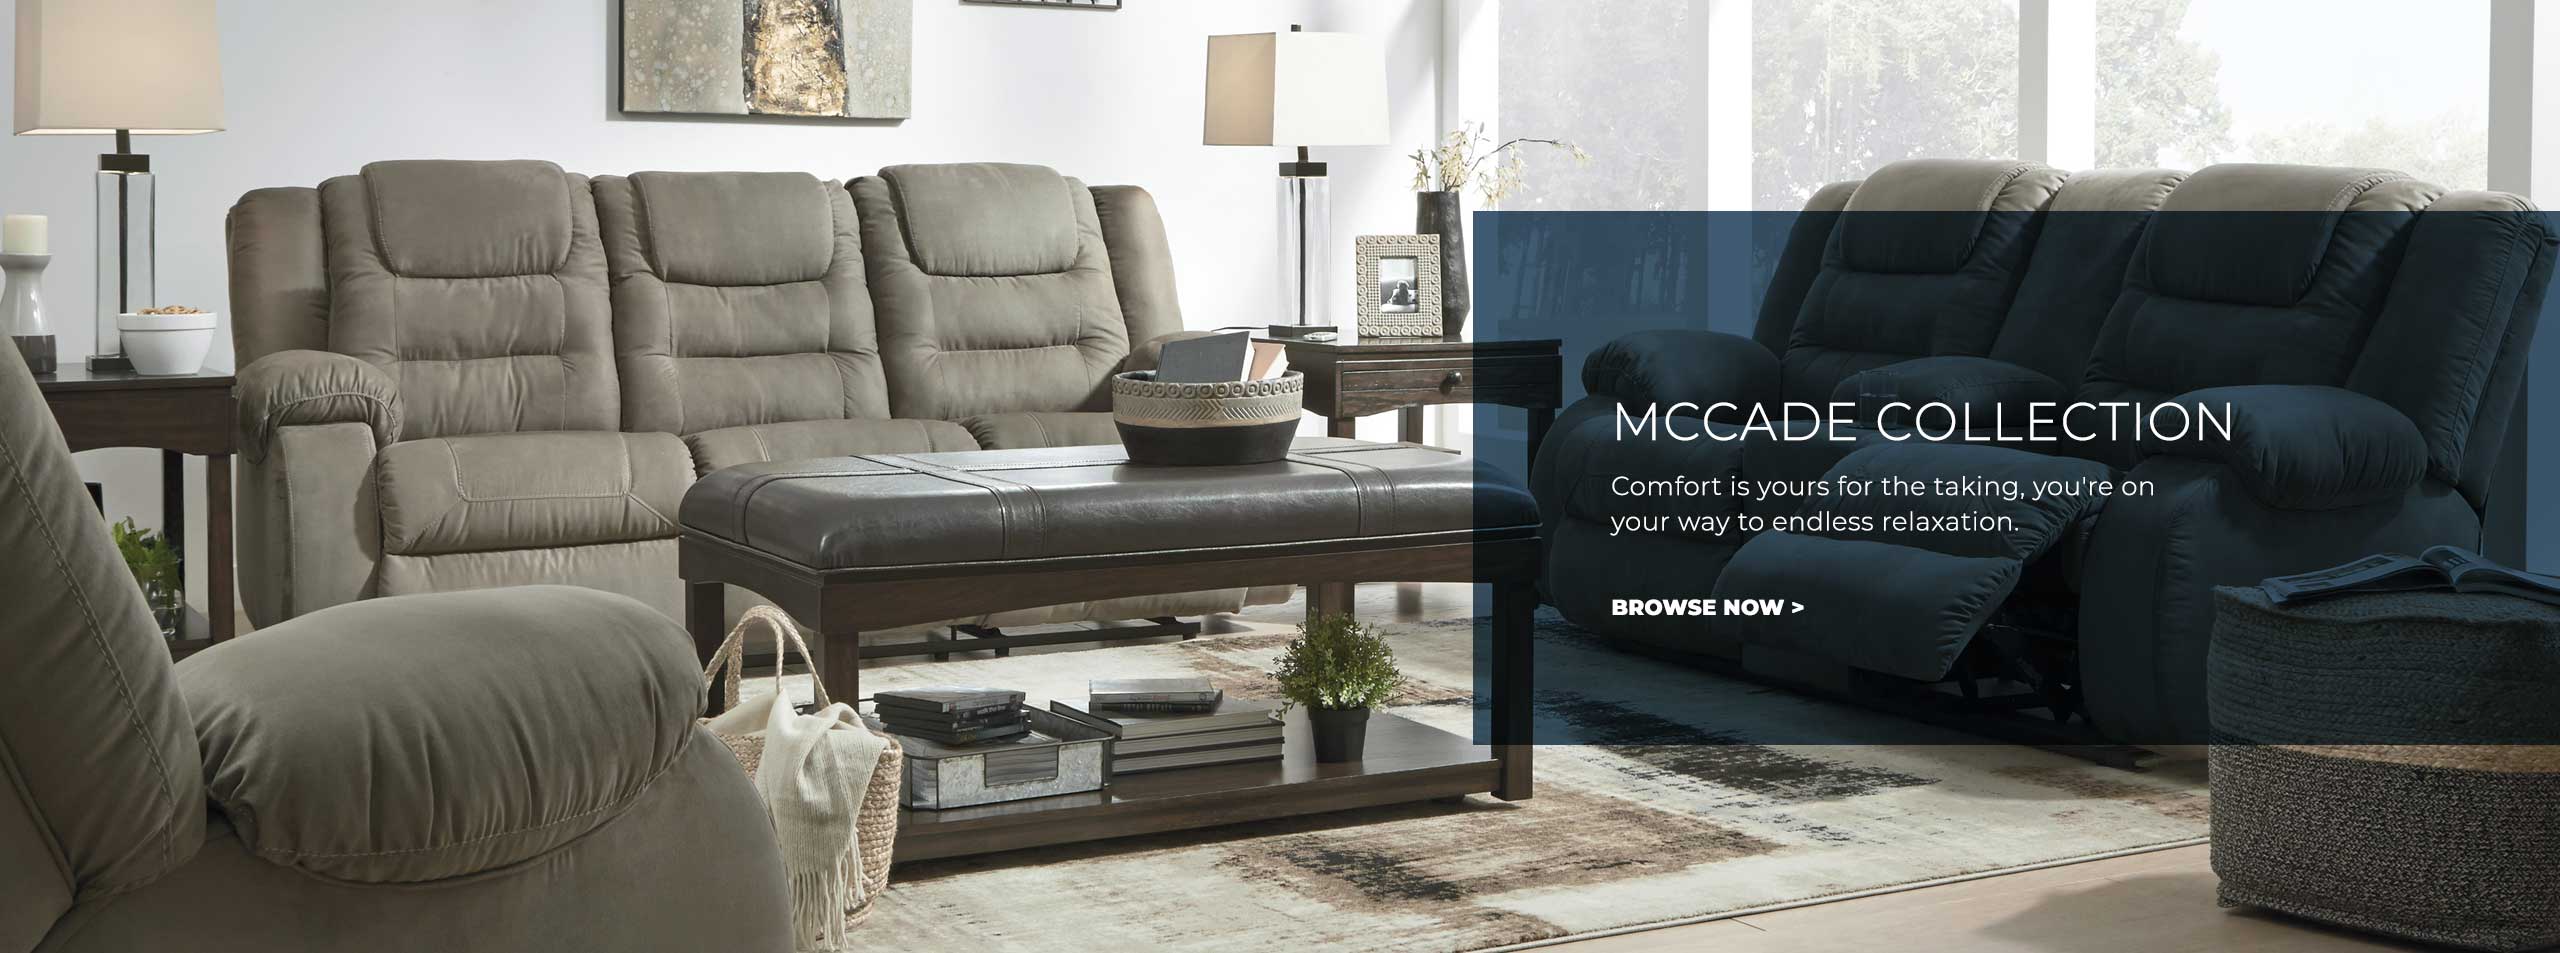 McCade Collection - Browse Now